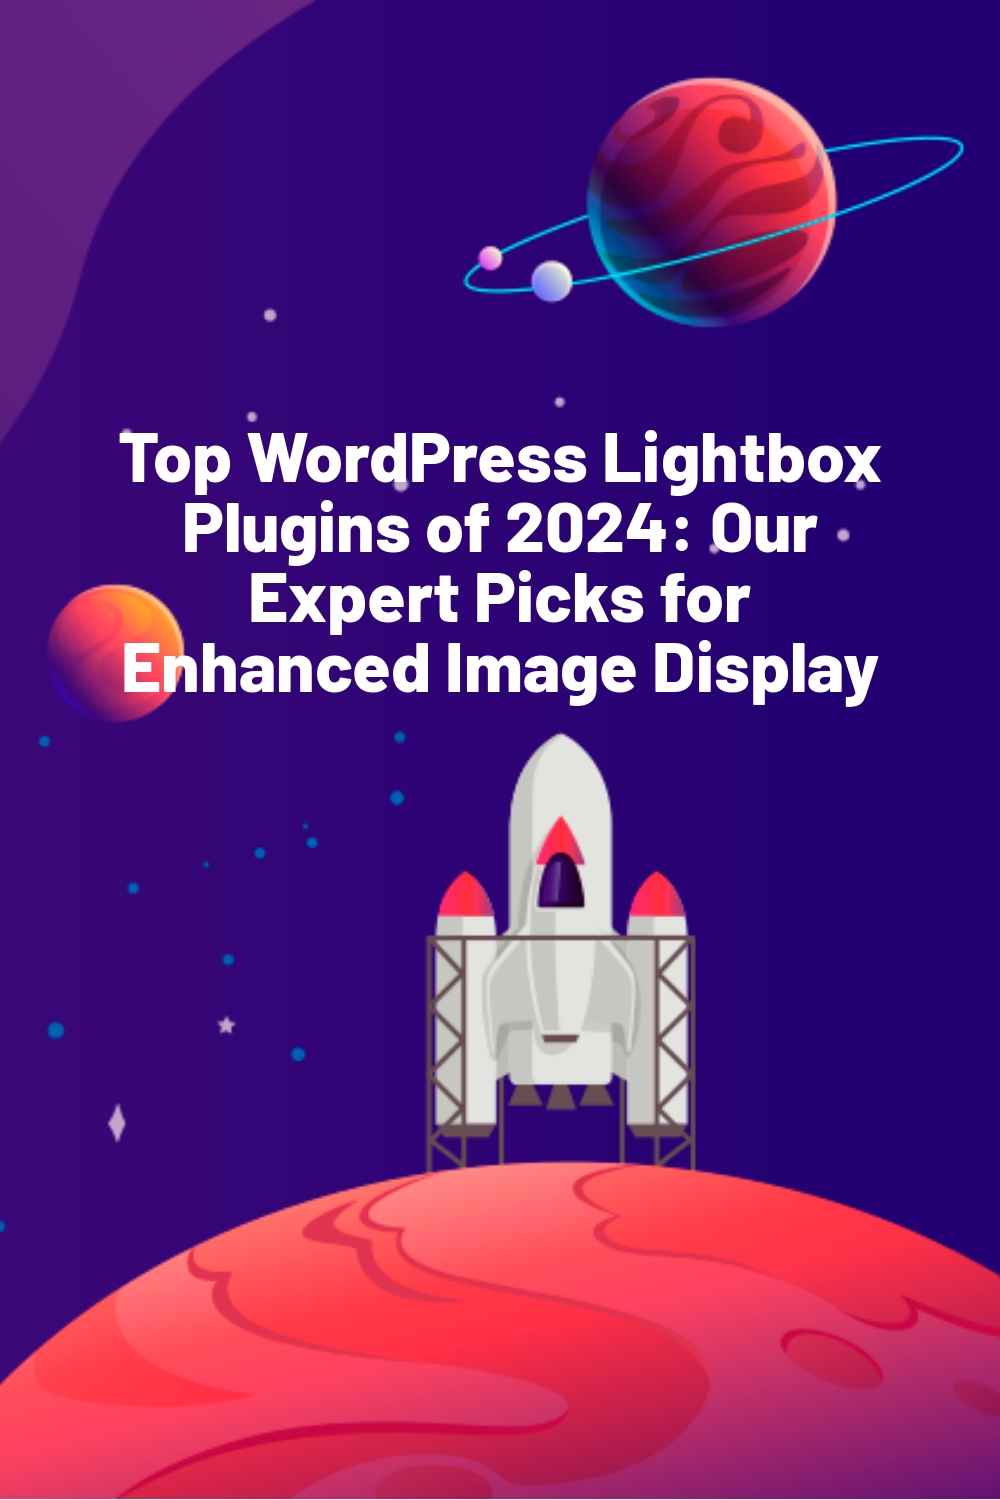 Top WordPress Lightbox Plugins of 2024: Our Expert Picks for Enhanced Image Display